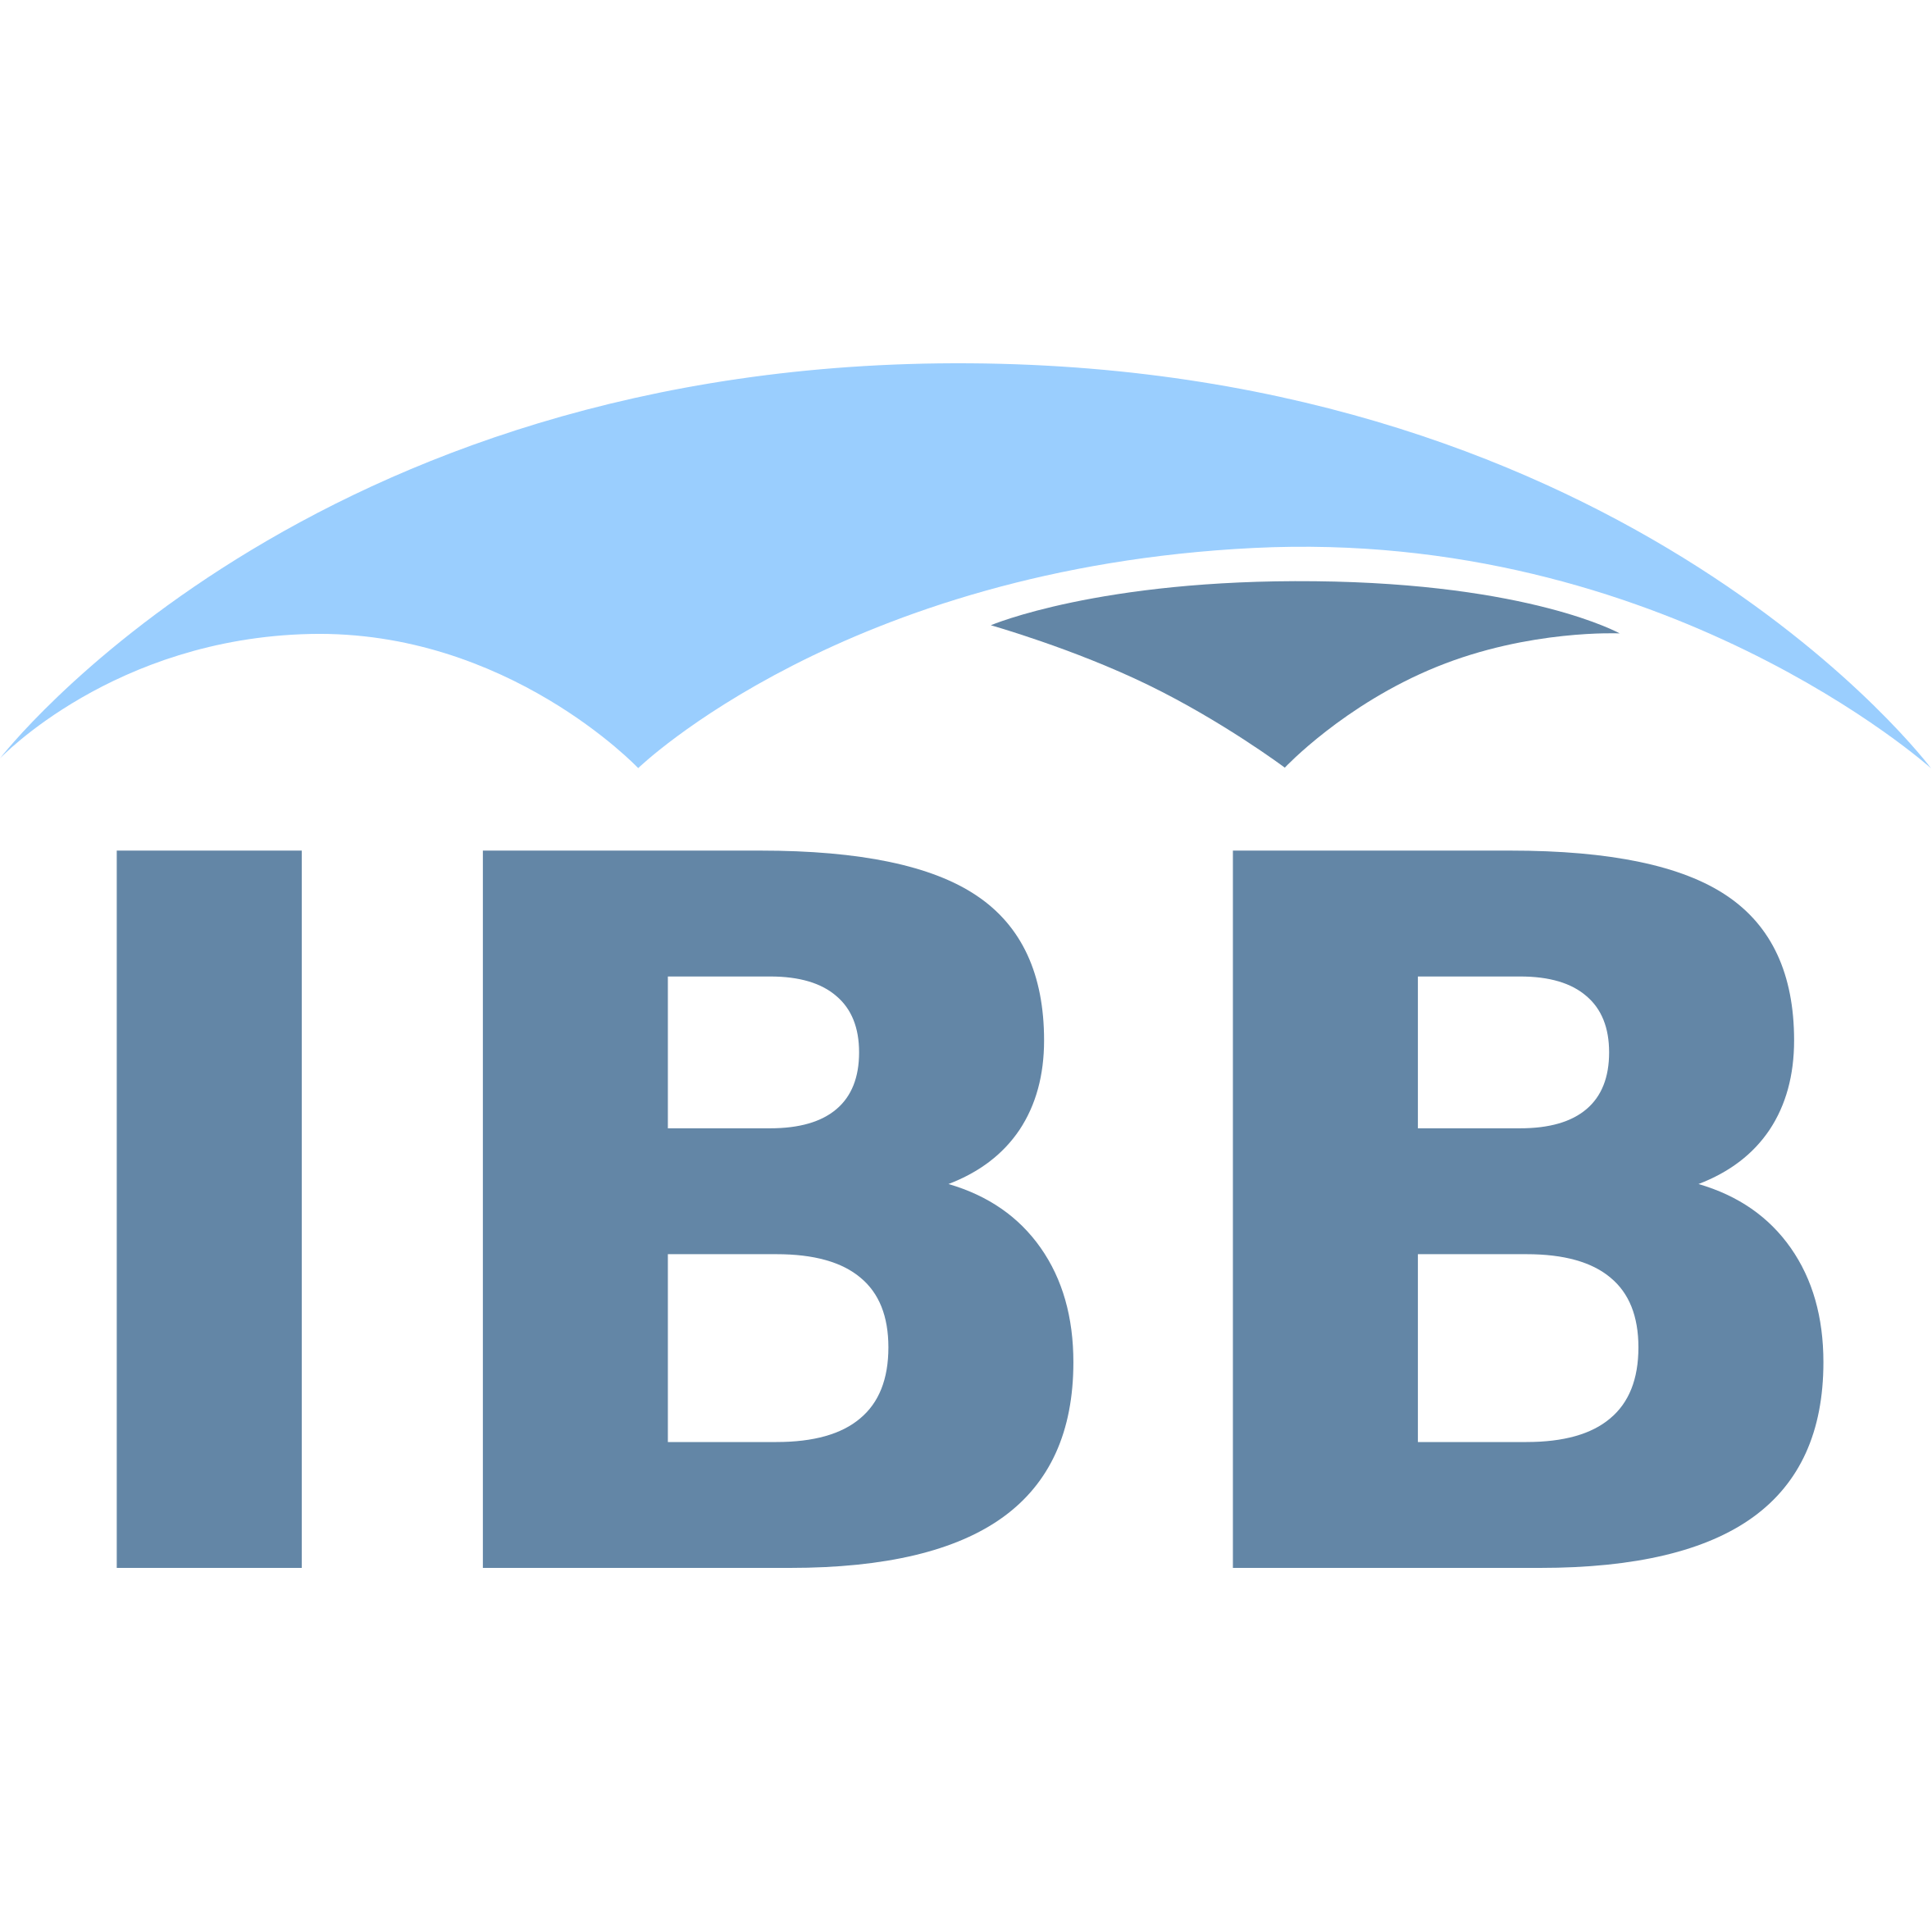 IBB logo